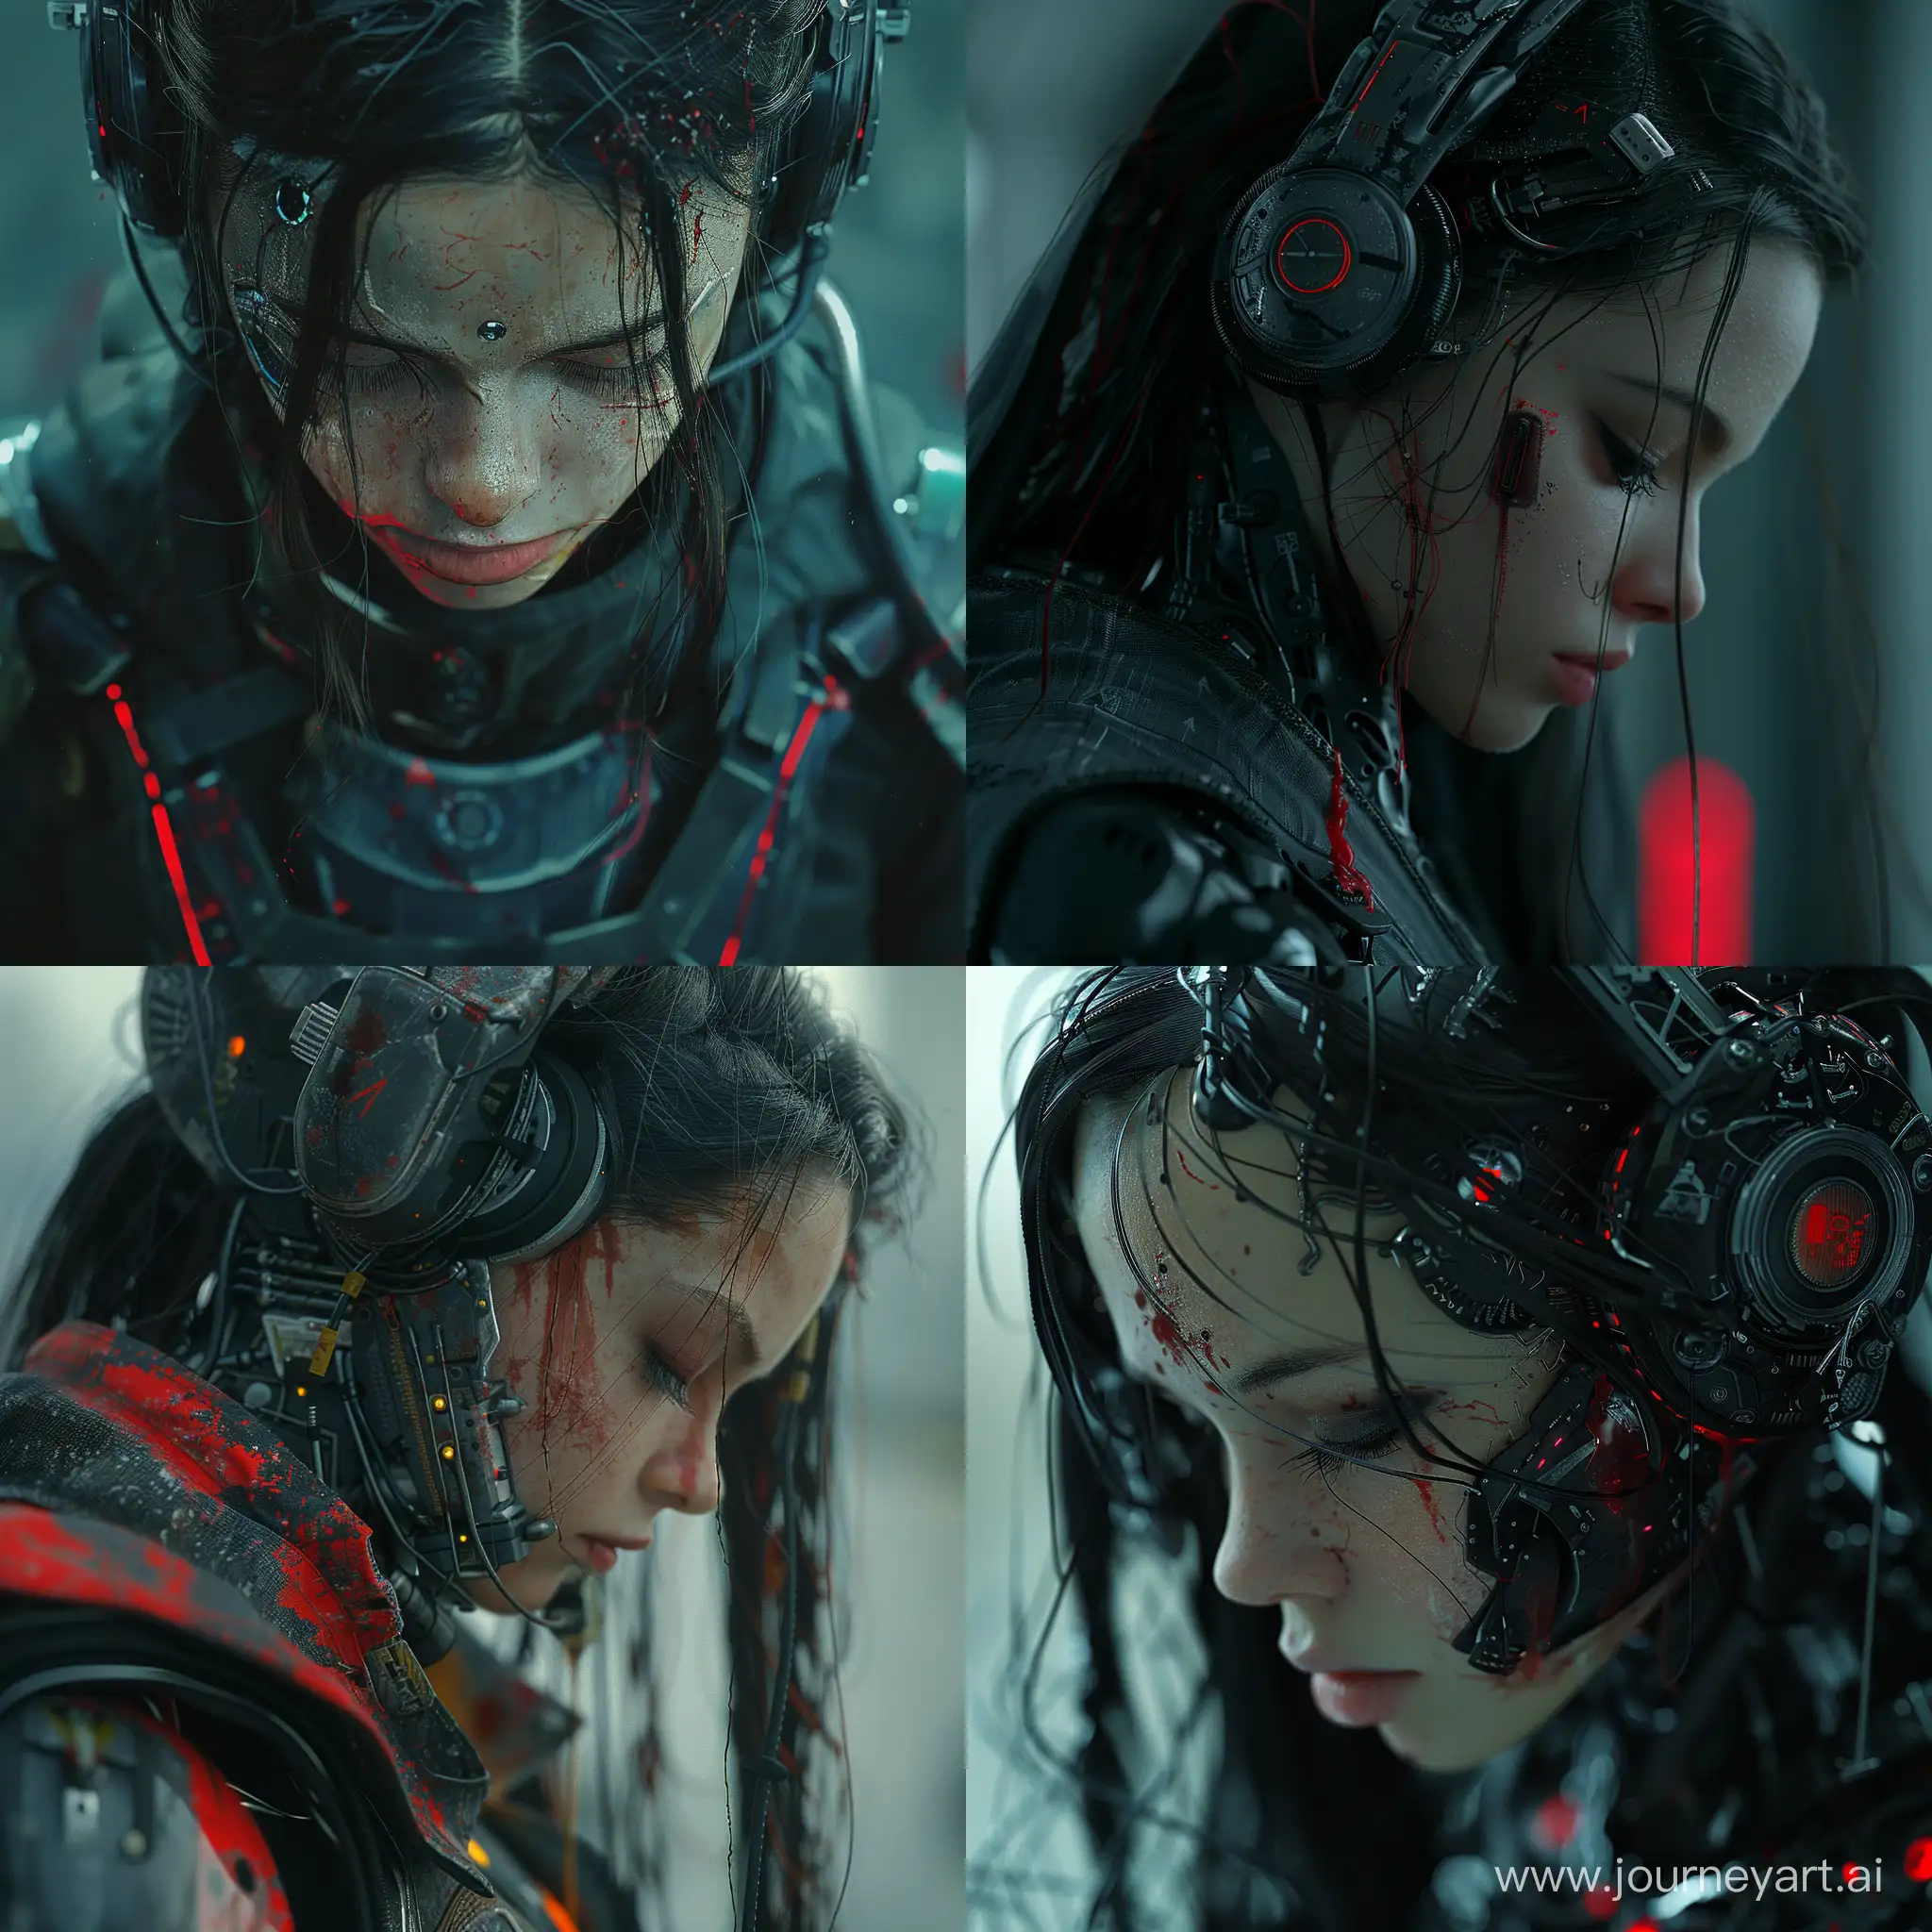 Realistic-Cyborg-Girl-Wearing-Headset-in-Cinematic-Dark-Setting